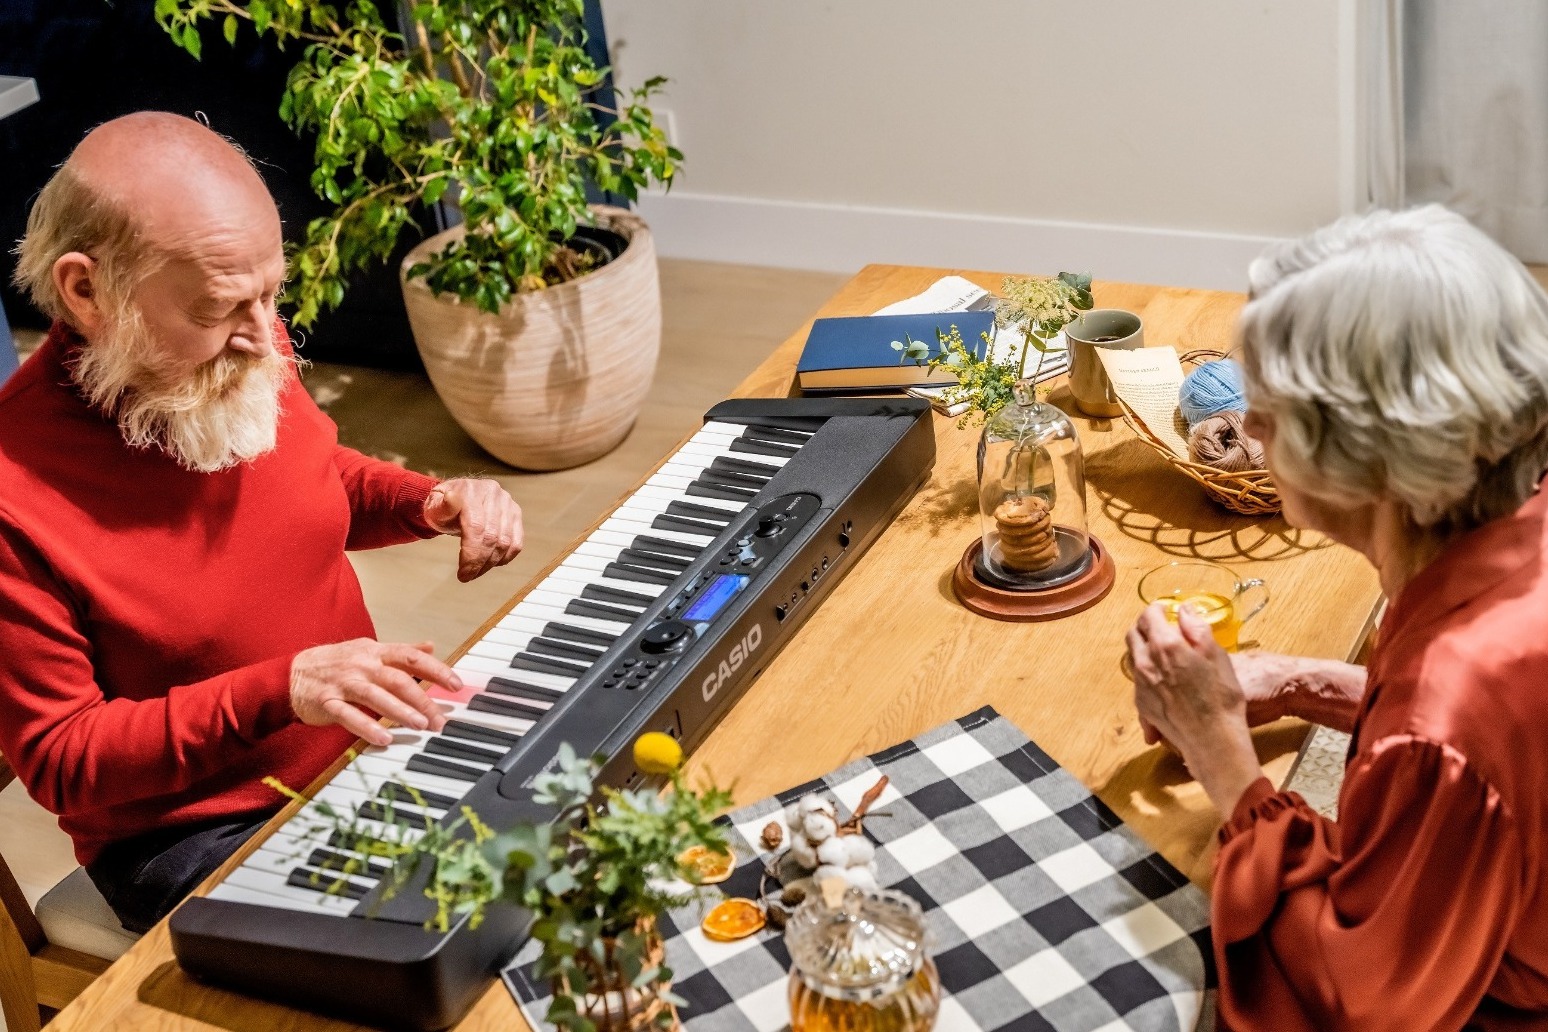 Keyboards strike memory chord among dementia patients 